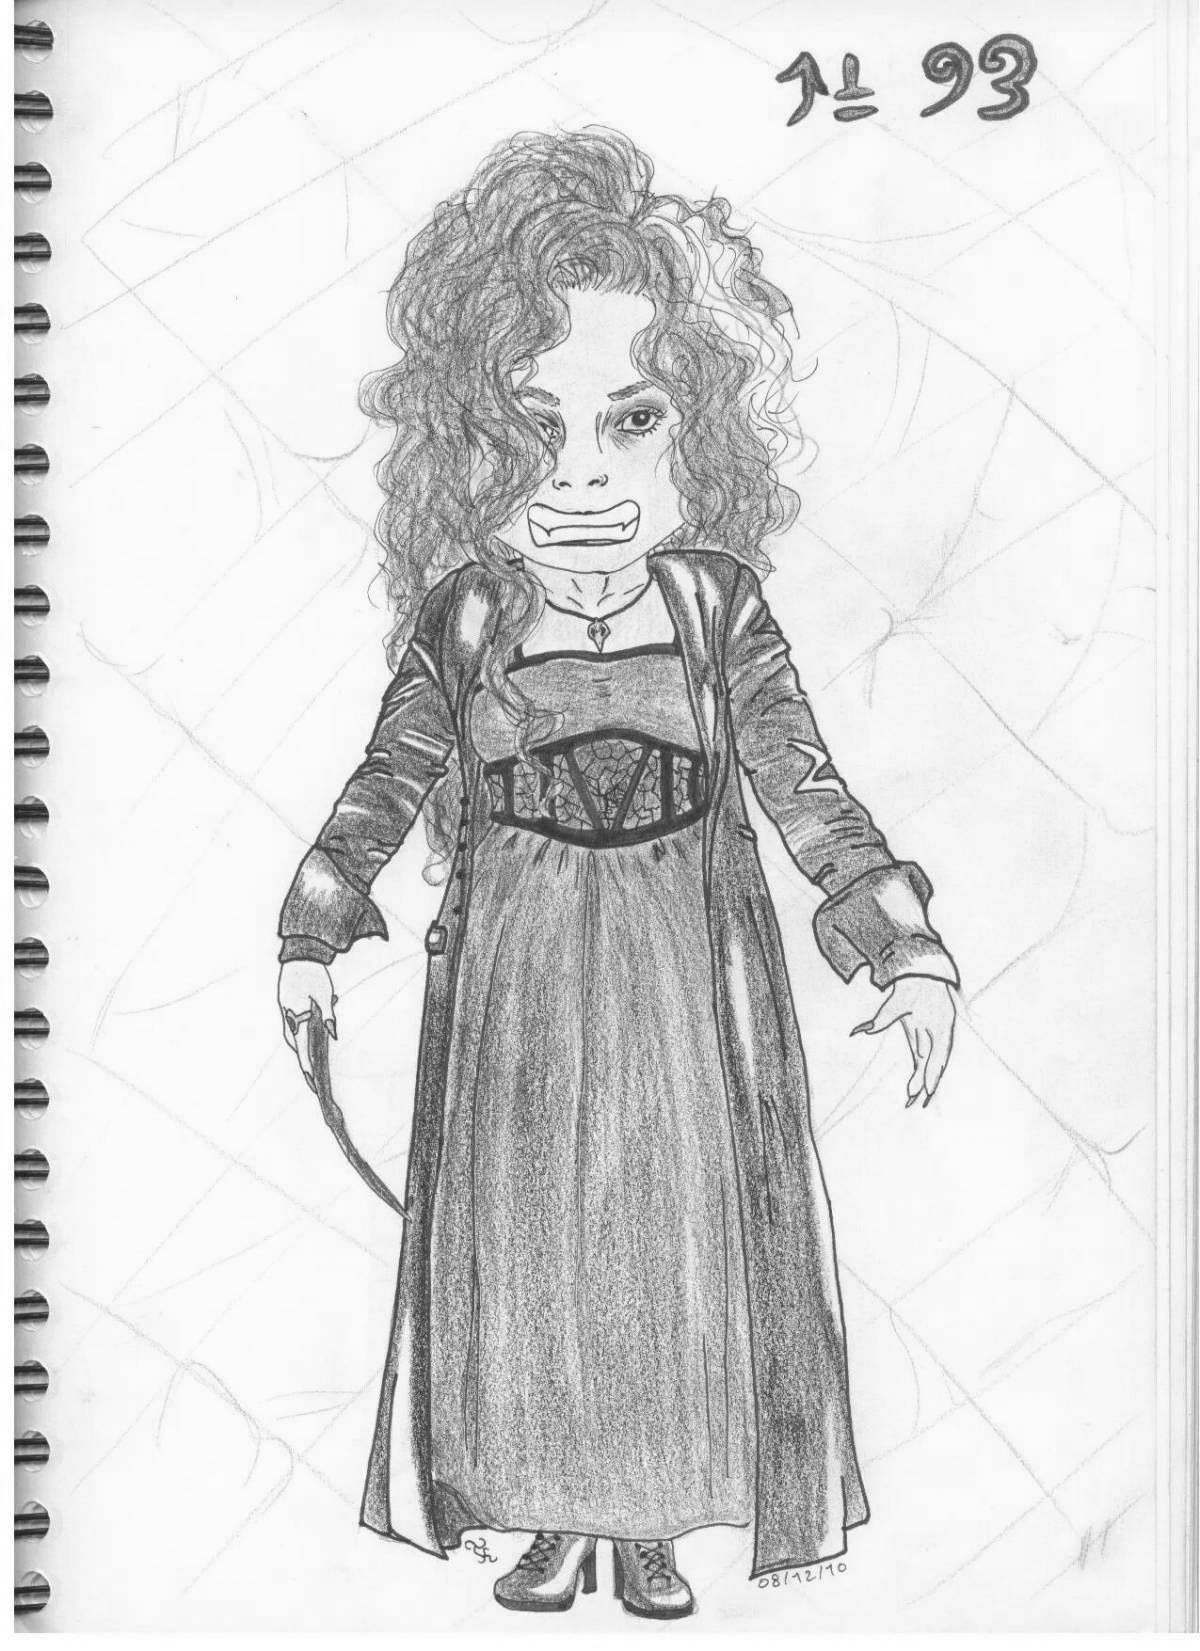 Bellatrix Lestrange's wonderful coloring book